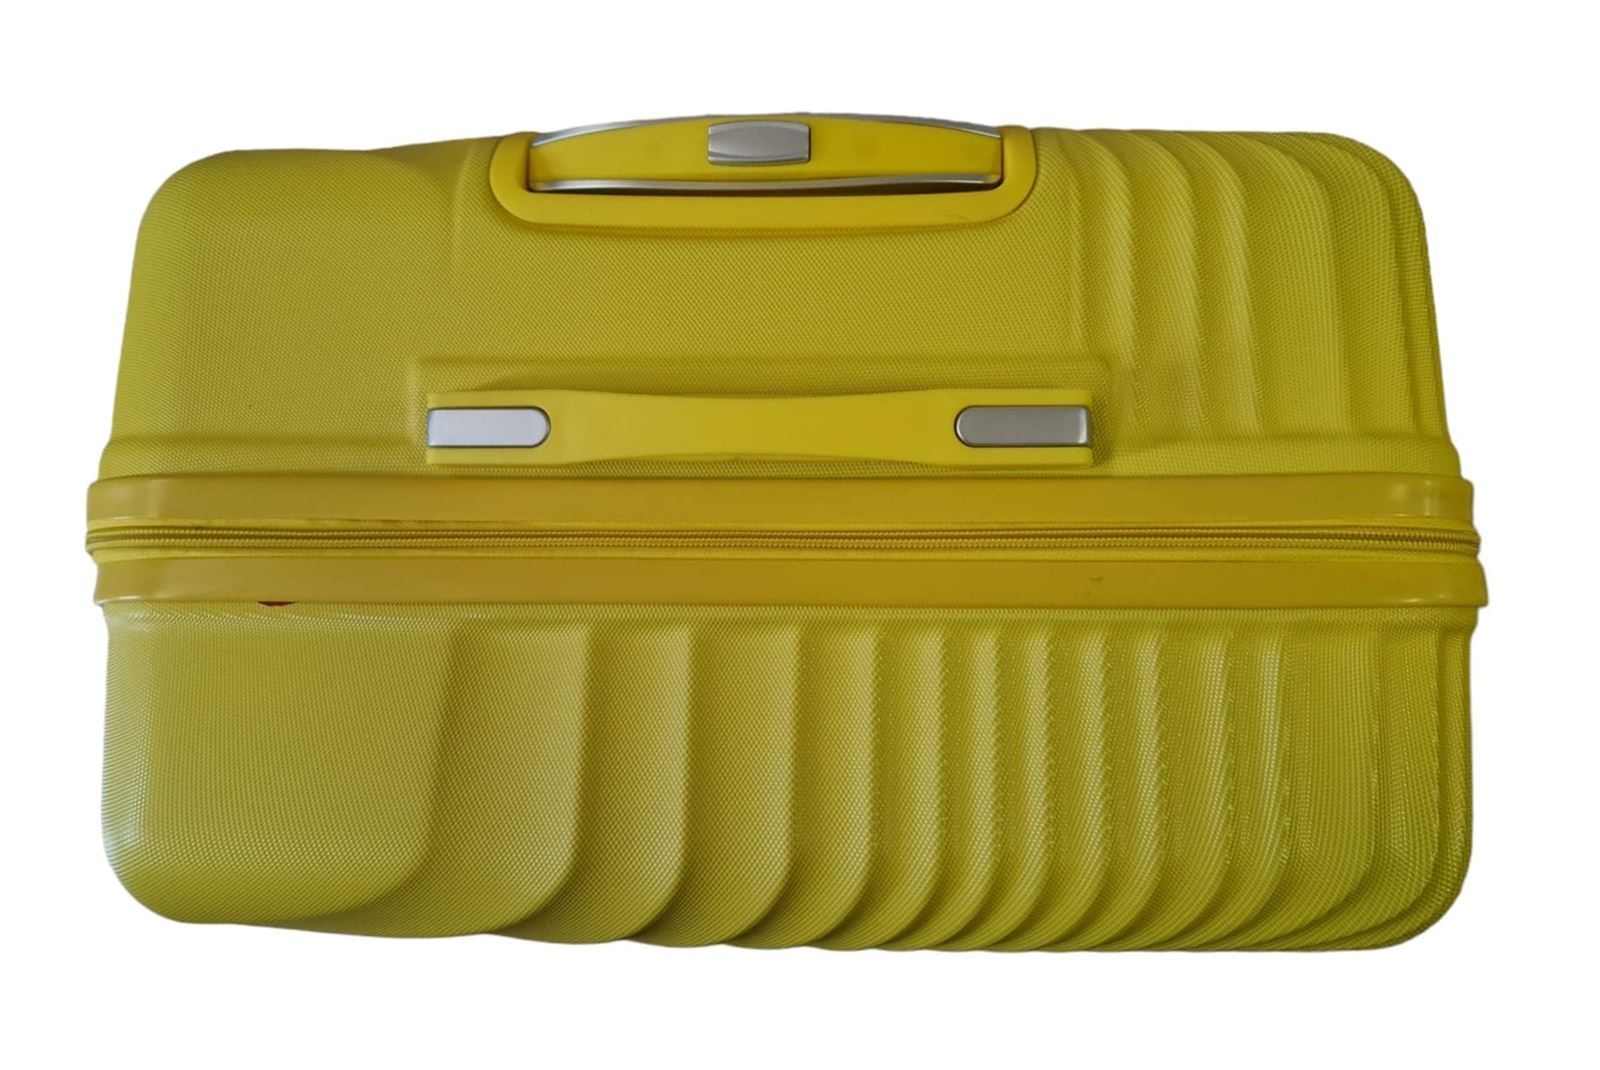 Maleta Grande Rigida Premium Muy Ligera Barata Material ABS Medidas 75x46x30 cms color Amarilla - Imagen 9